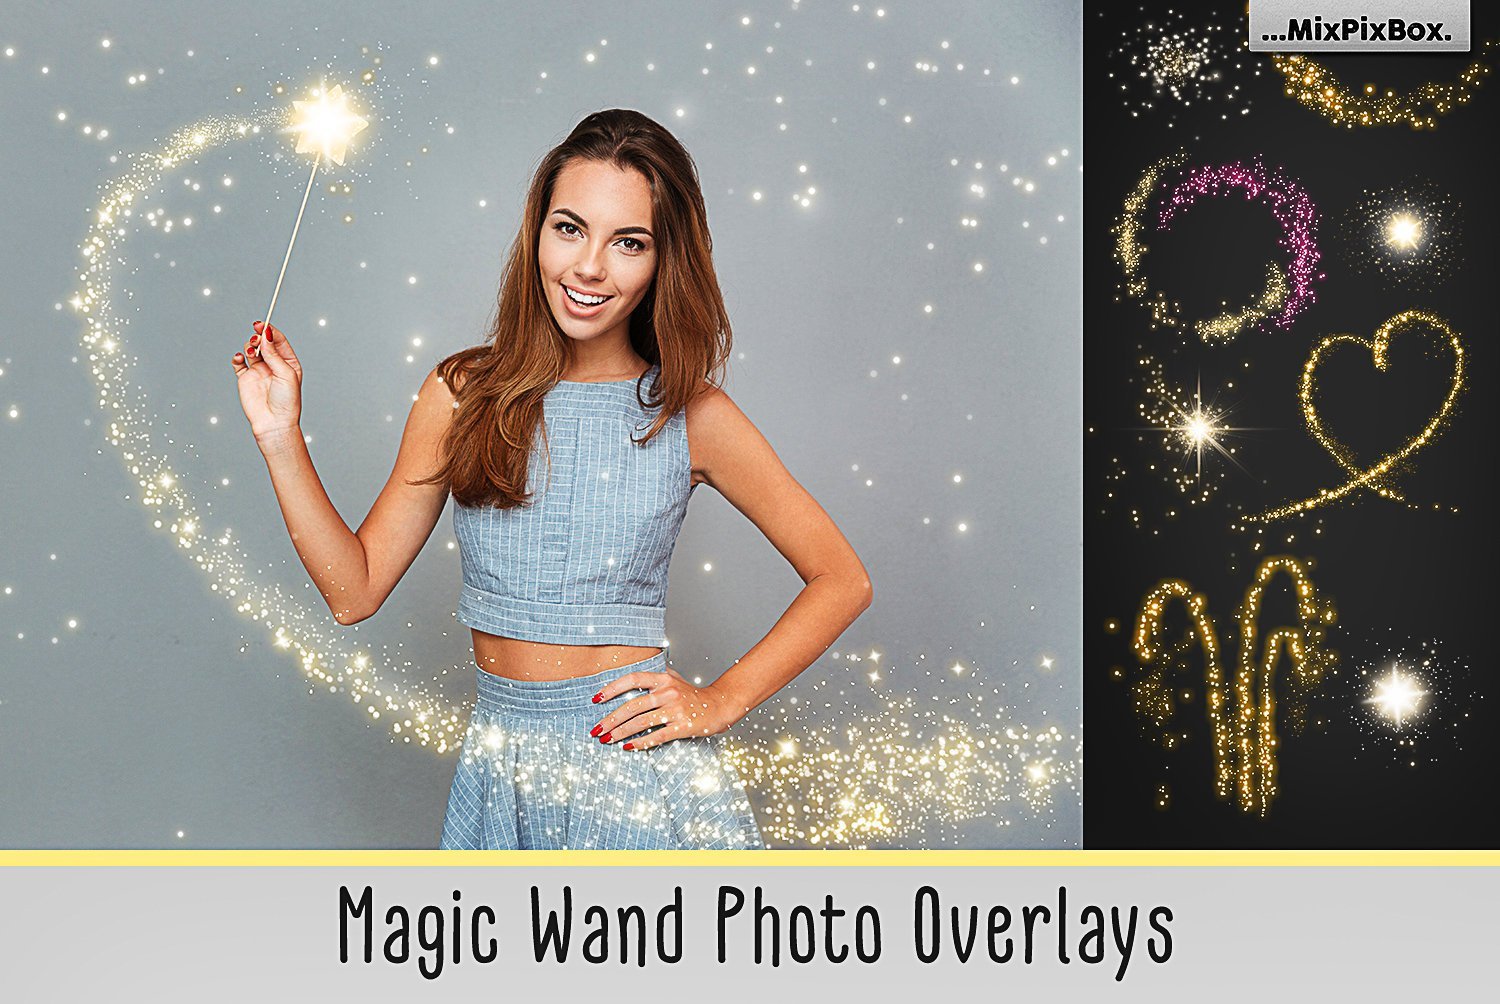 Magic Wand Overlayscover image.